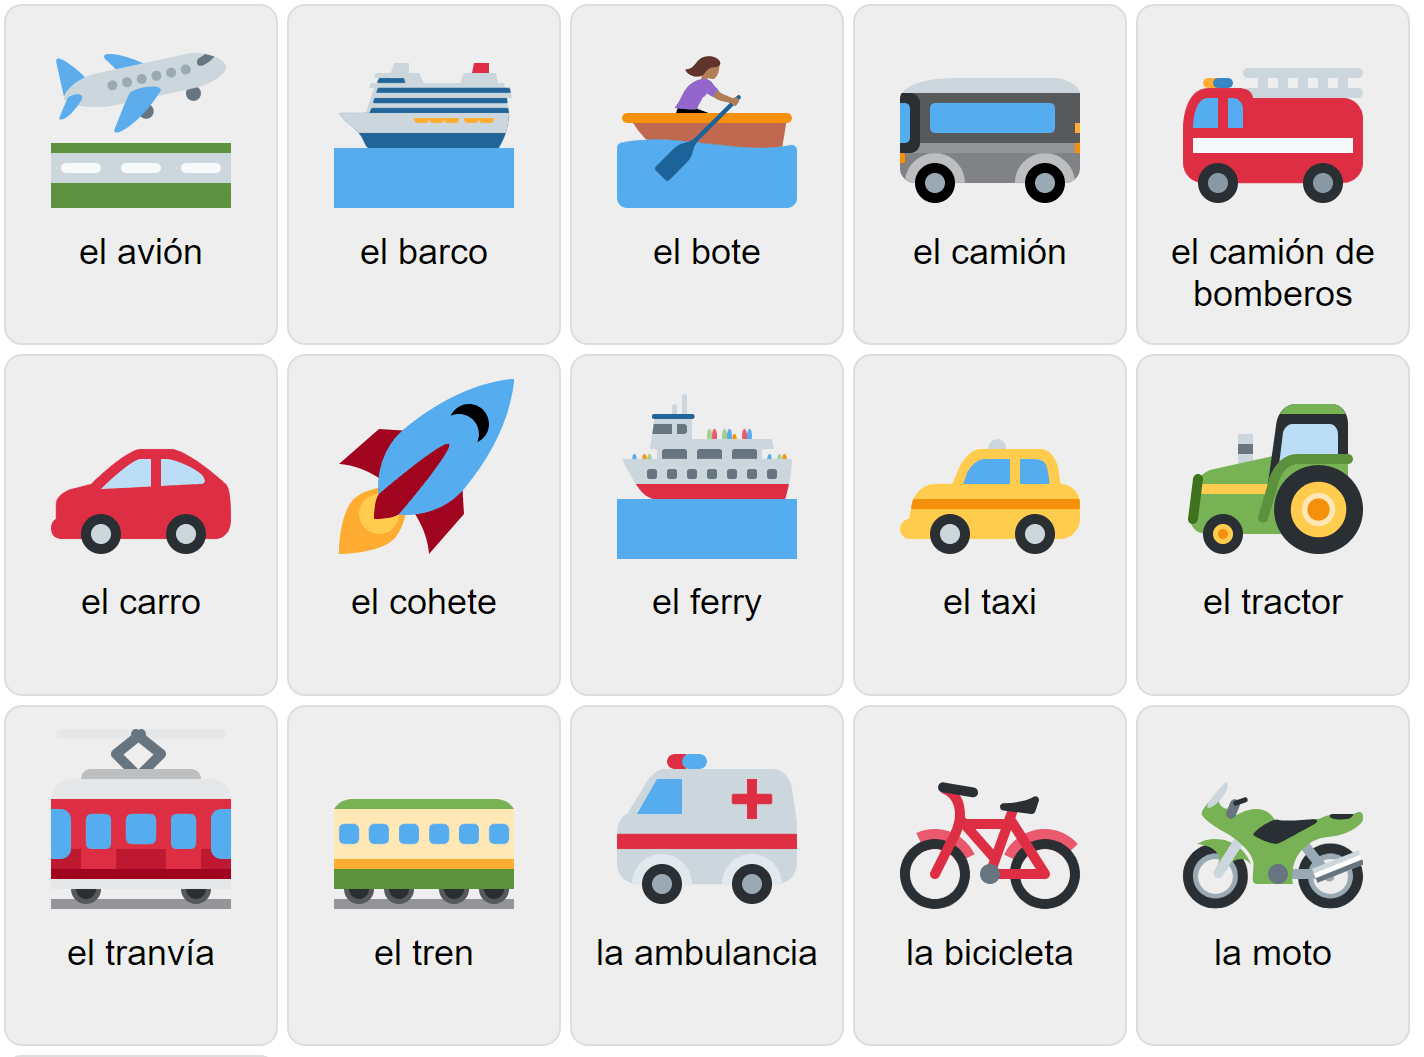 Transport in Spanish